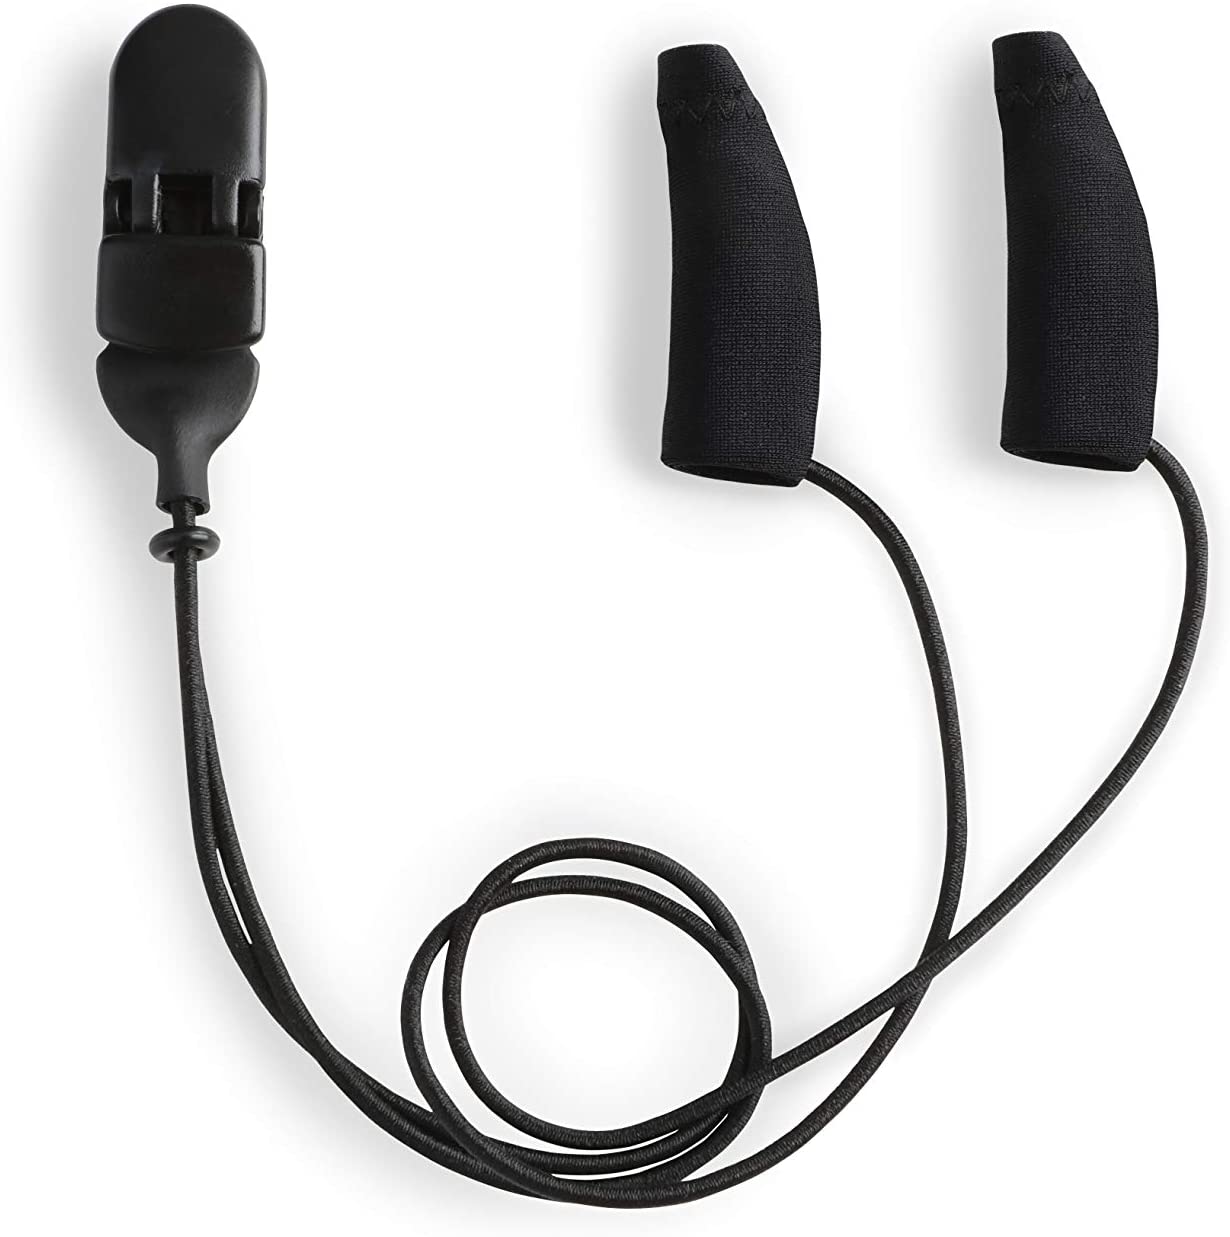 Ear Gear Mini Corded (Binaural) | 1